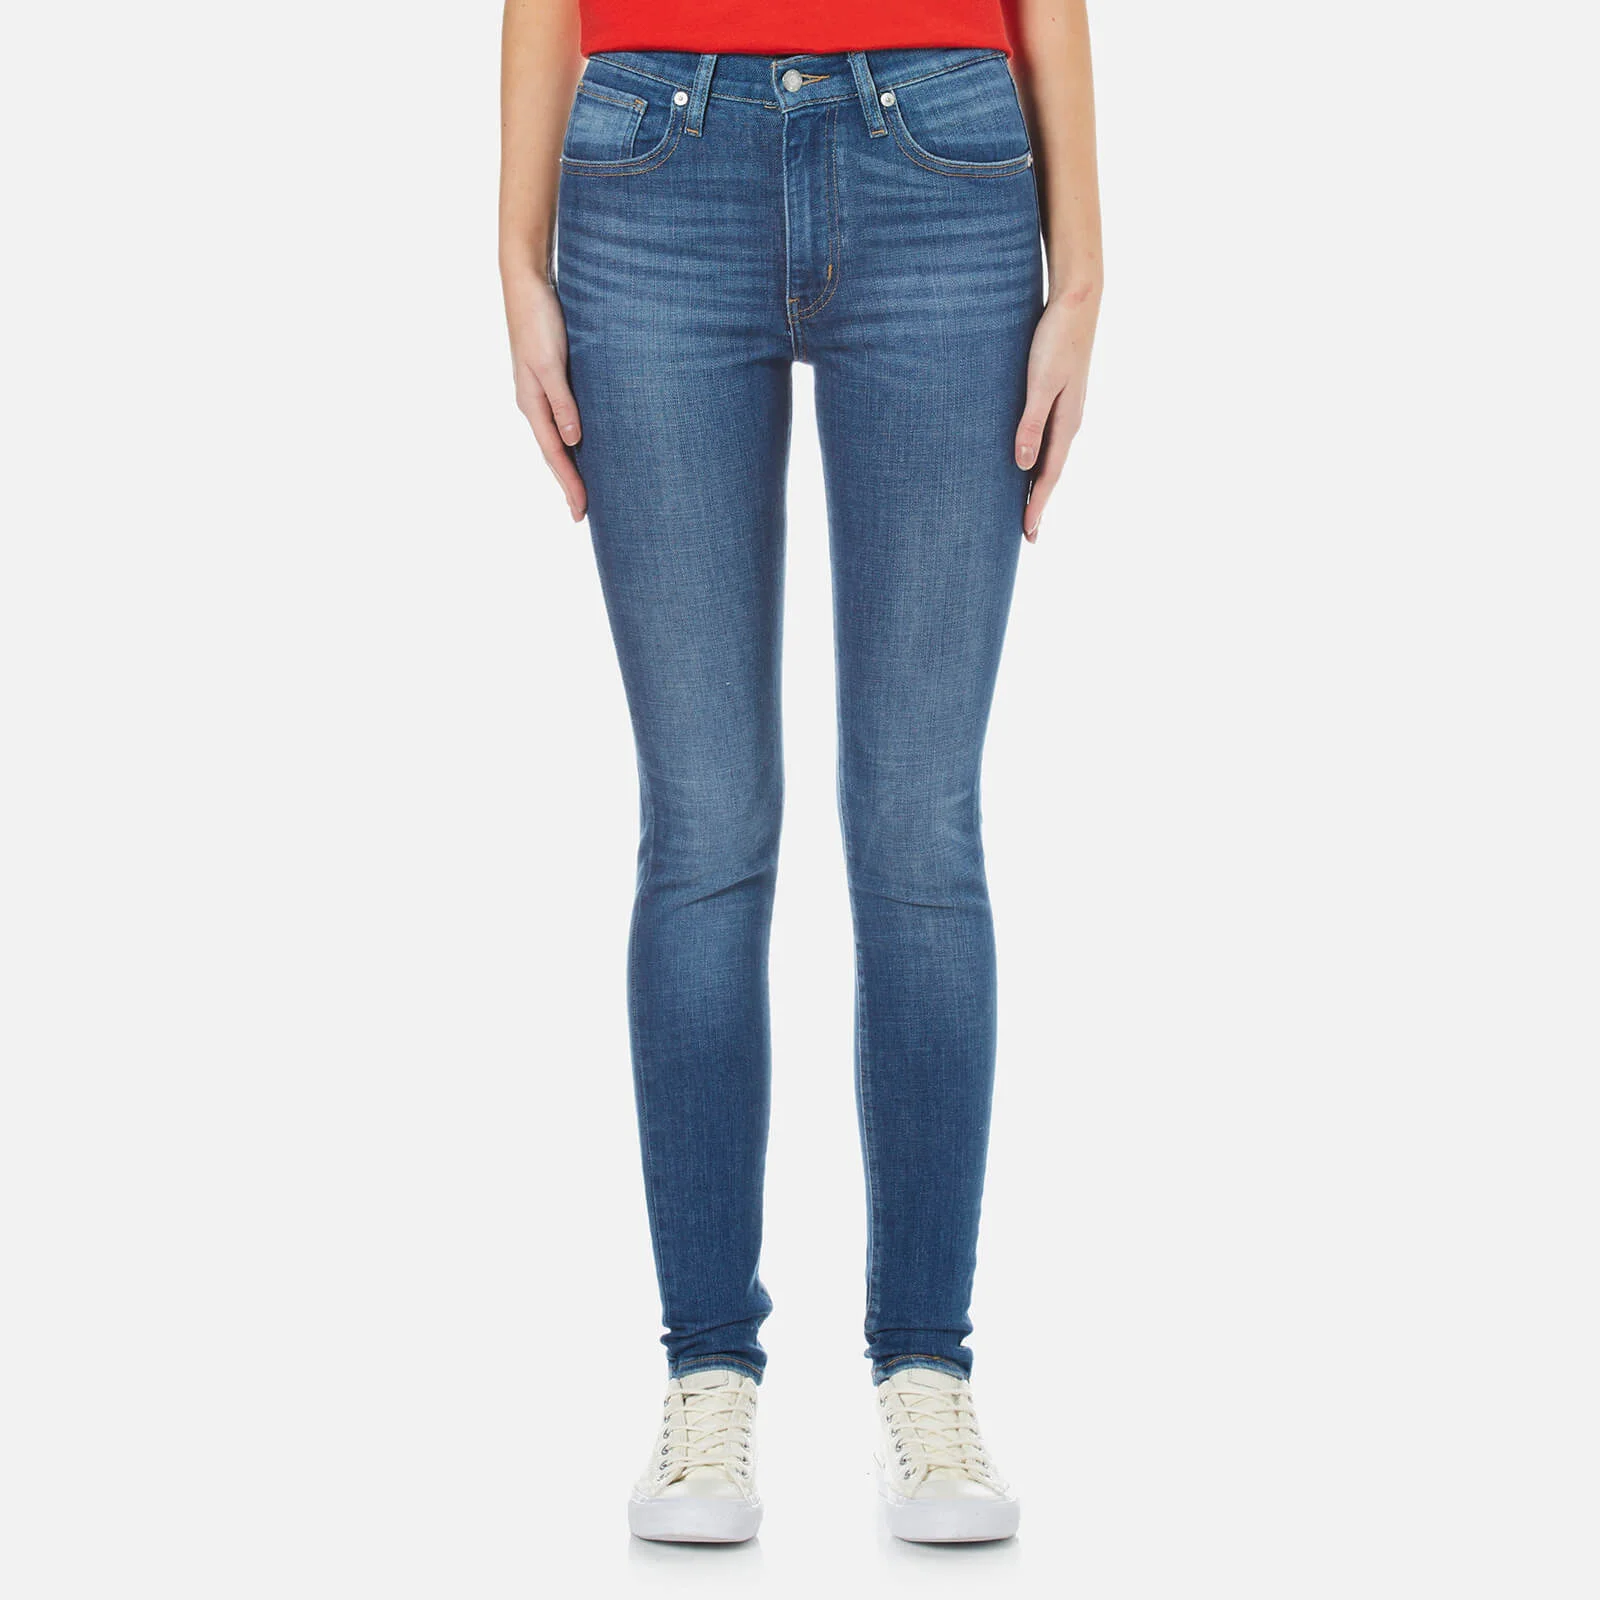 Levi's Women's Mile High Super Skinny Jeans - Shut the Front Door Image 1